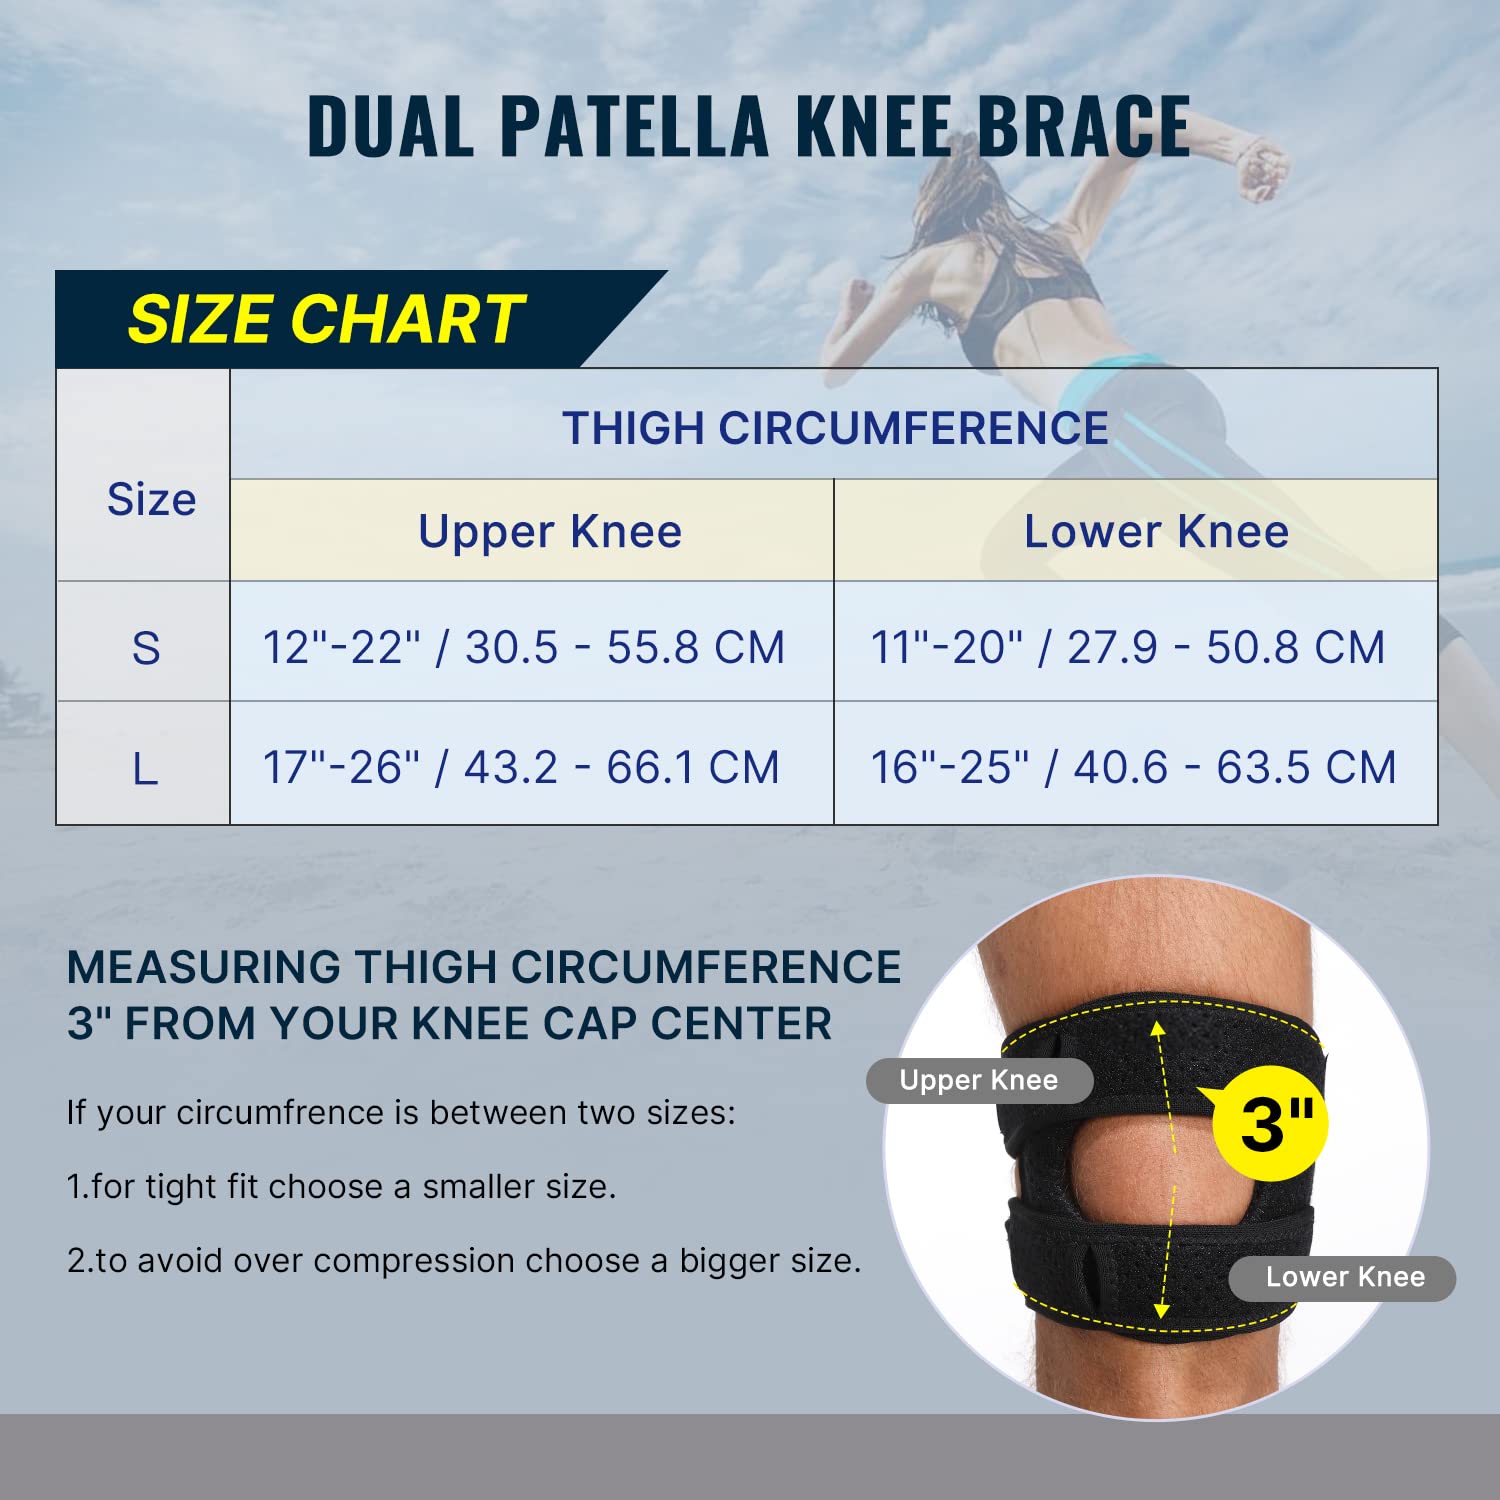 Spring Loaded Knee Brace, Fit Geno ReActive+ Knee Brace